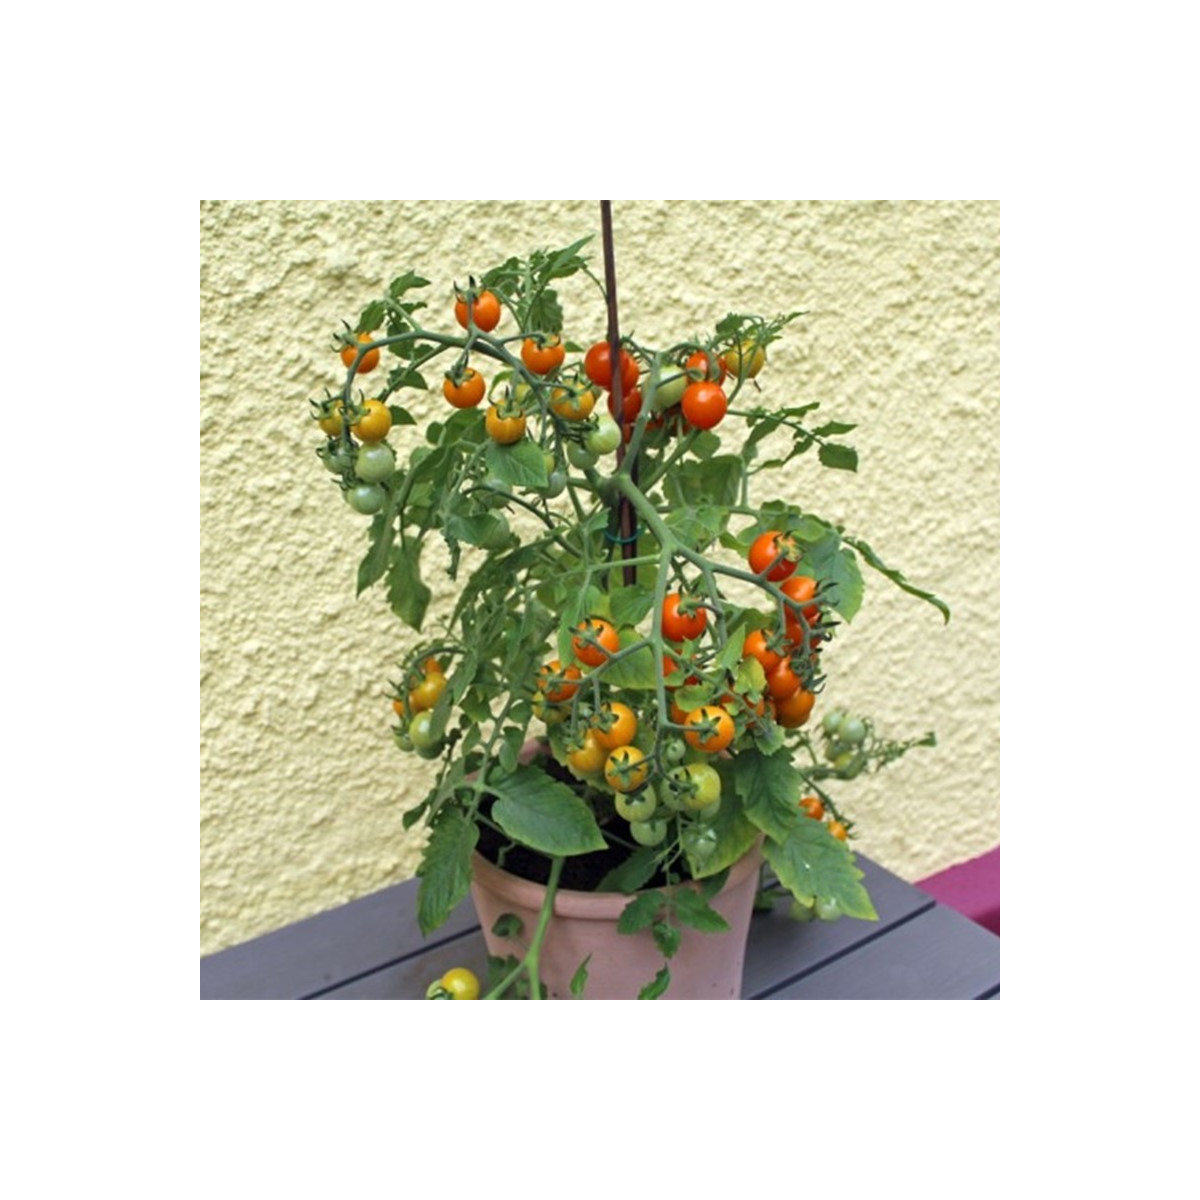 Rajče Tiny Temptations Orange PhR - Solanum lycopersicum - osivo rajčat - 5 ks